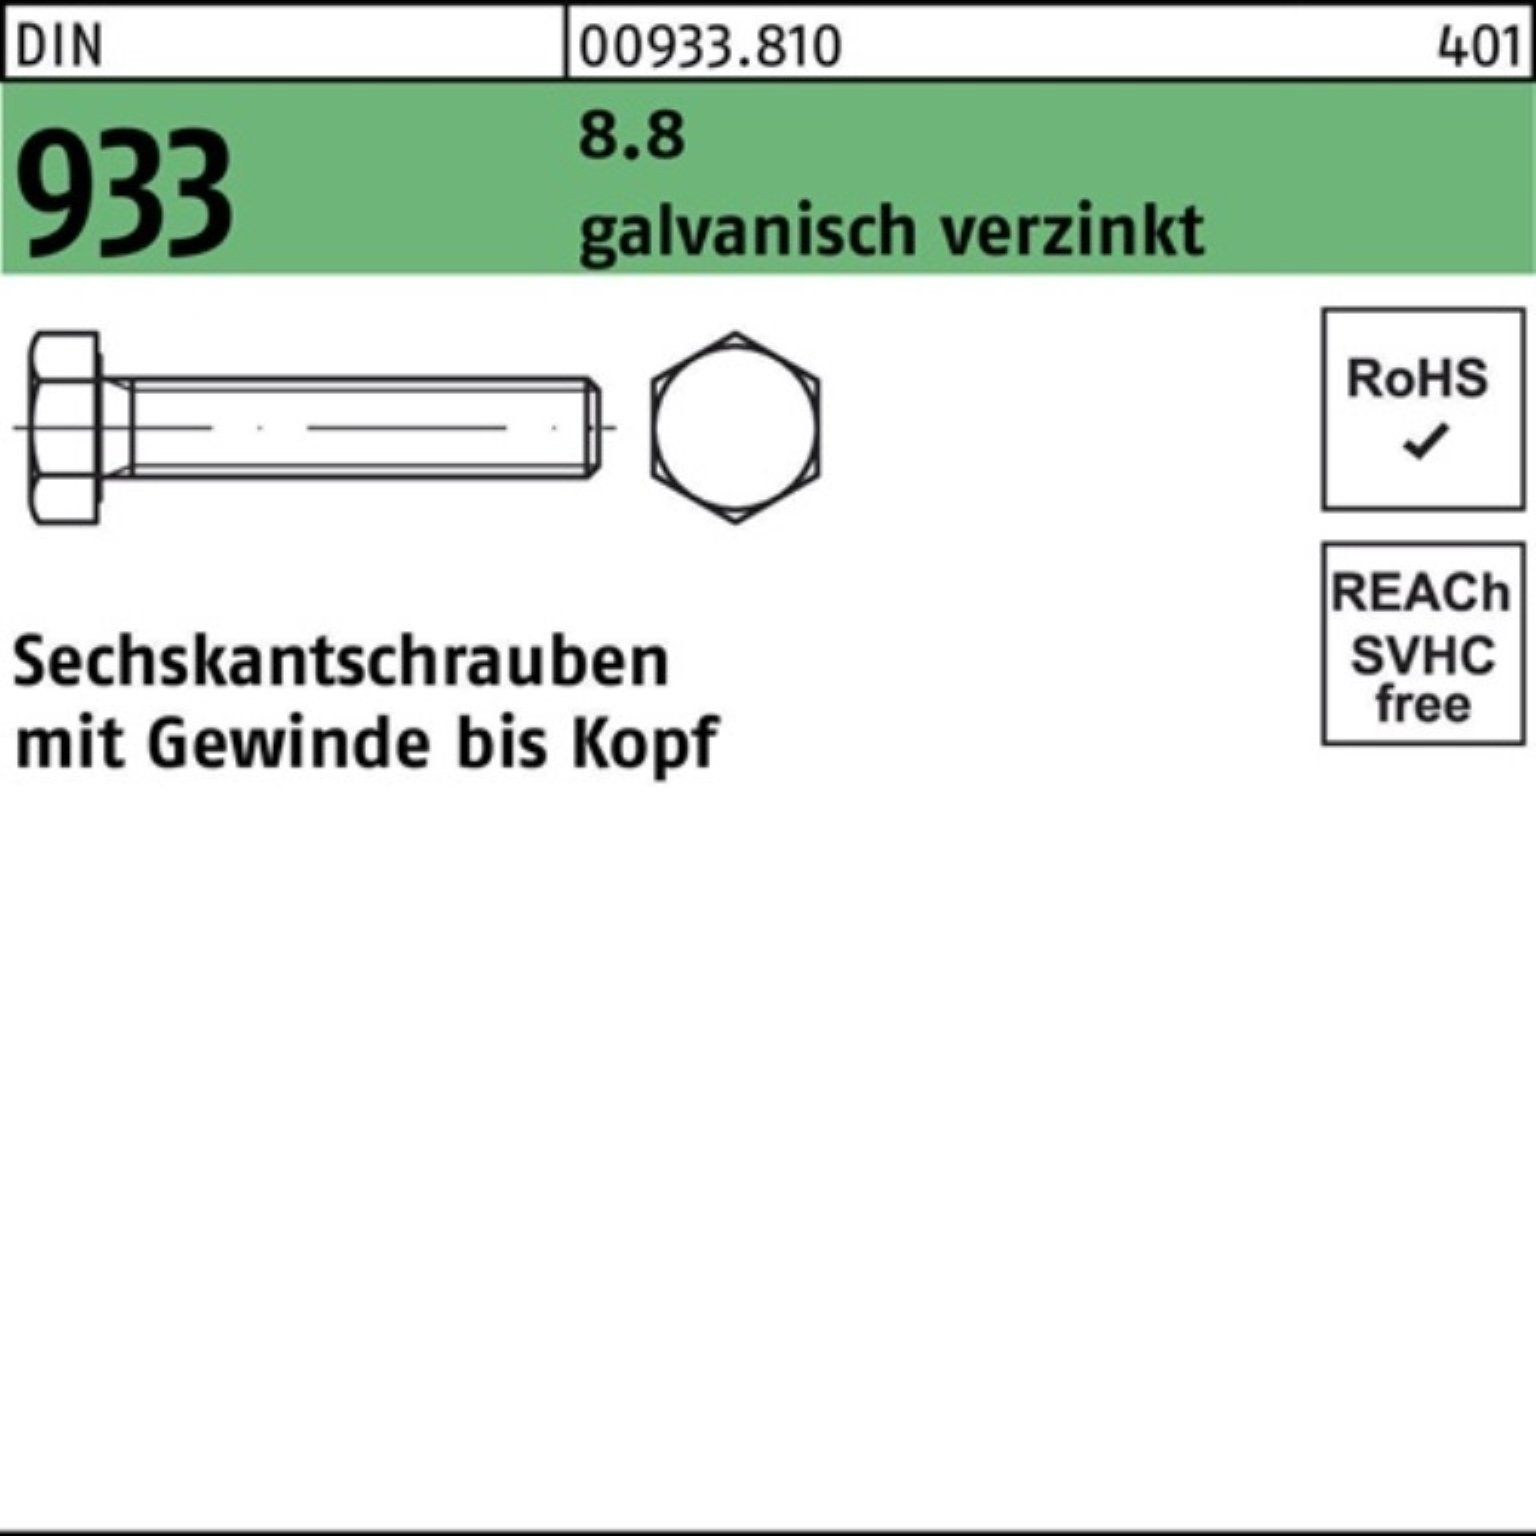 Sechskantschraube Reyher DIN 80 100er Pack 933 galv.verz. M42x Sechskantschraube 8.8 1 Stüc VG